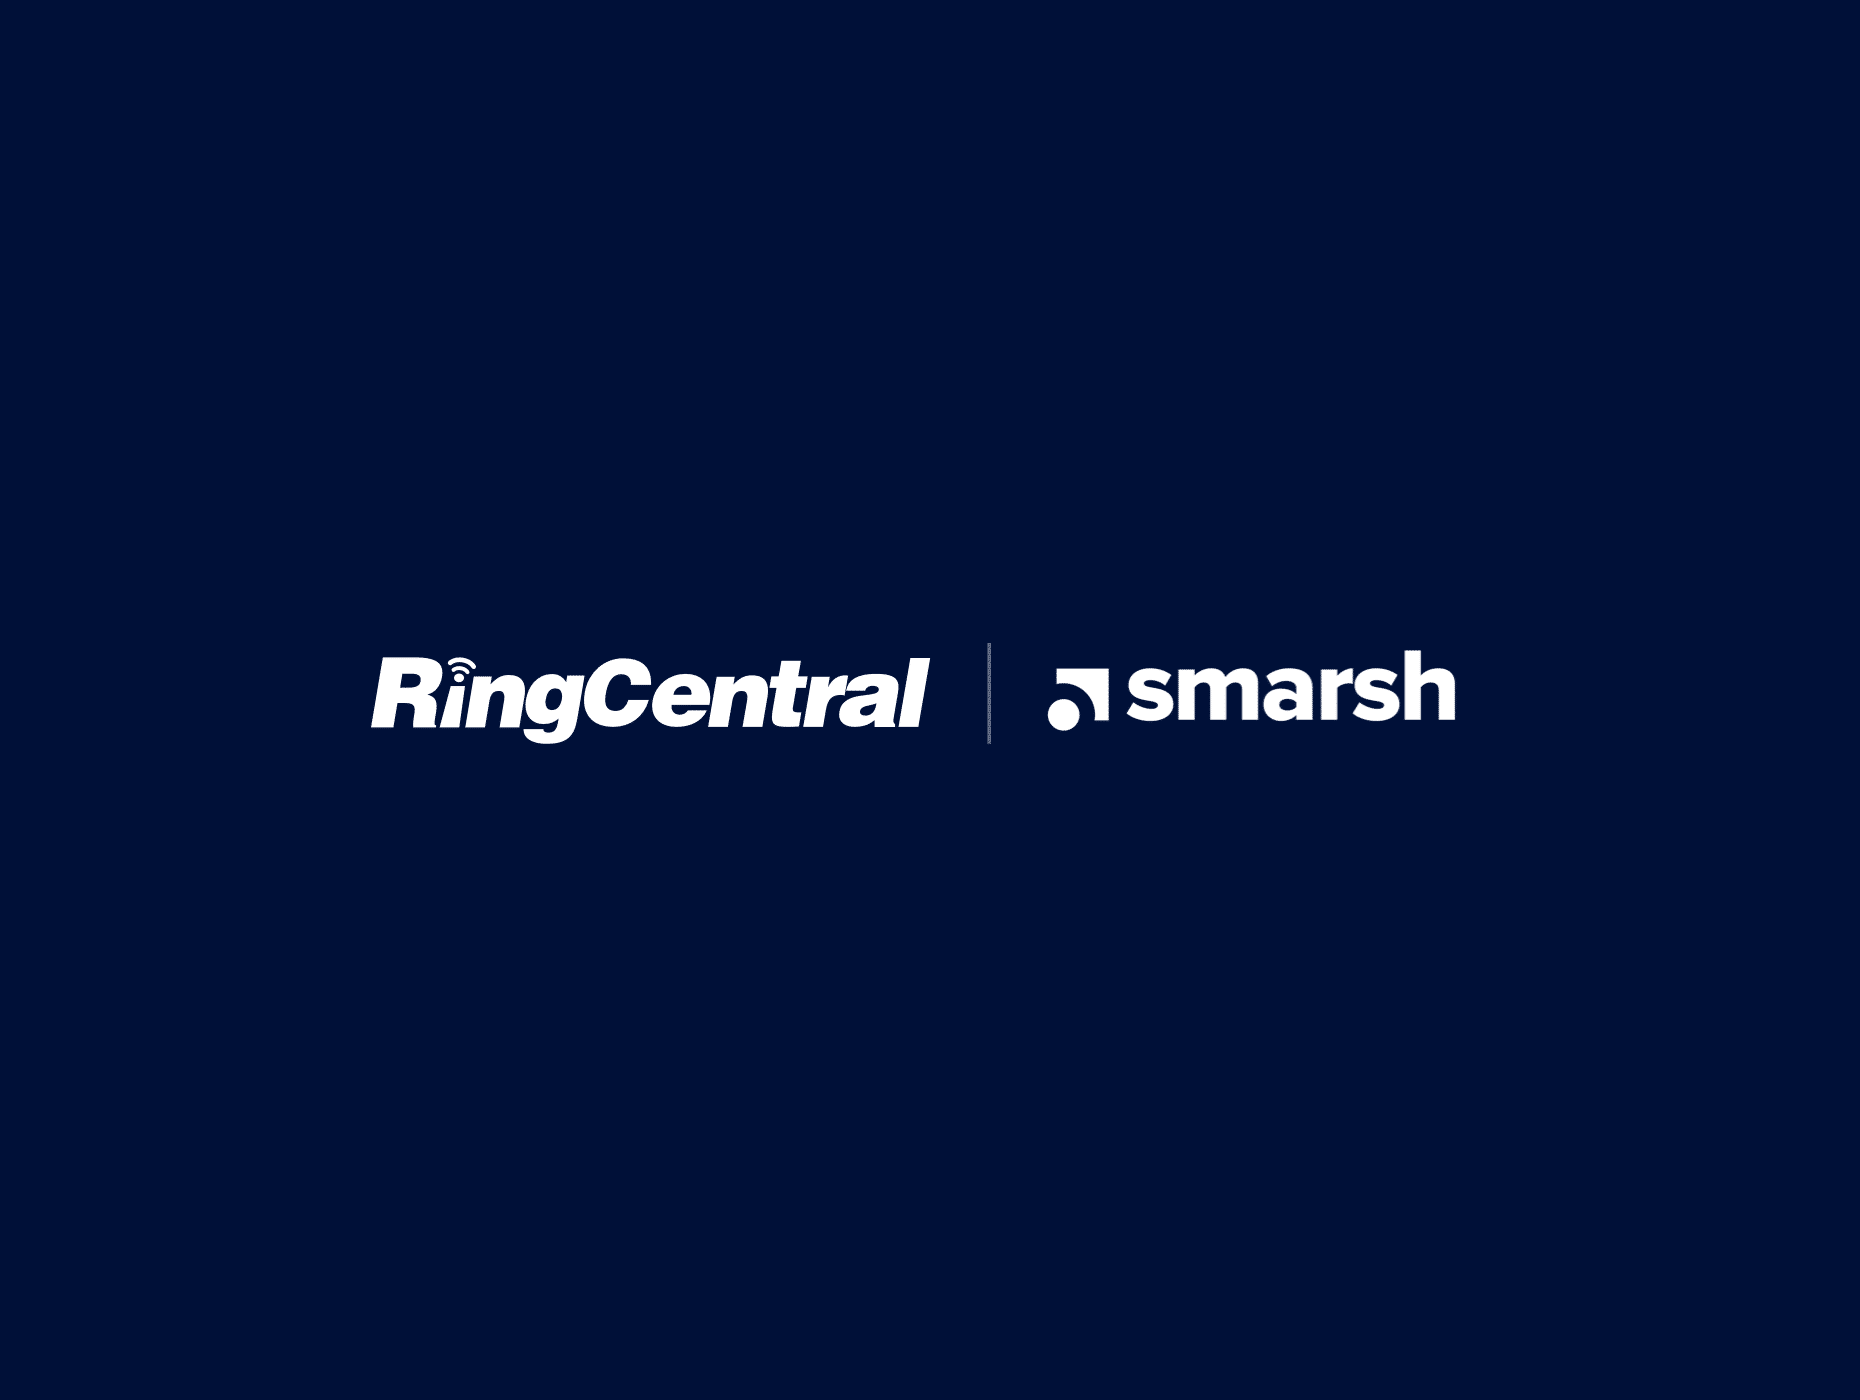 Ring Central Blog